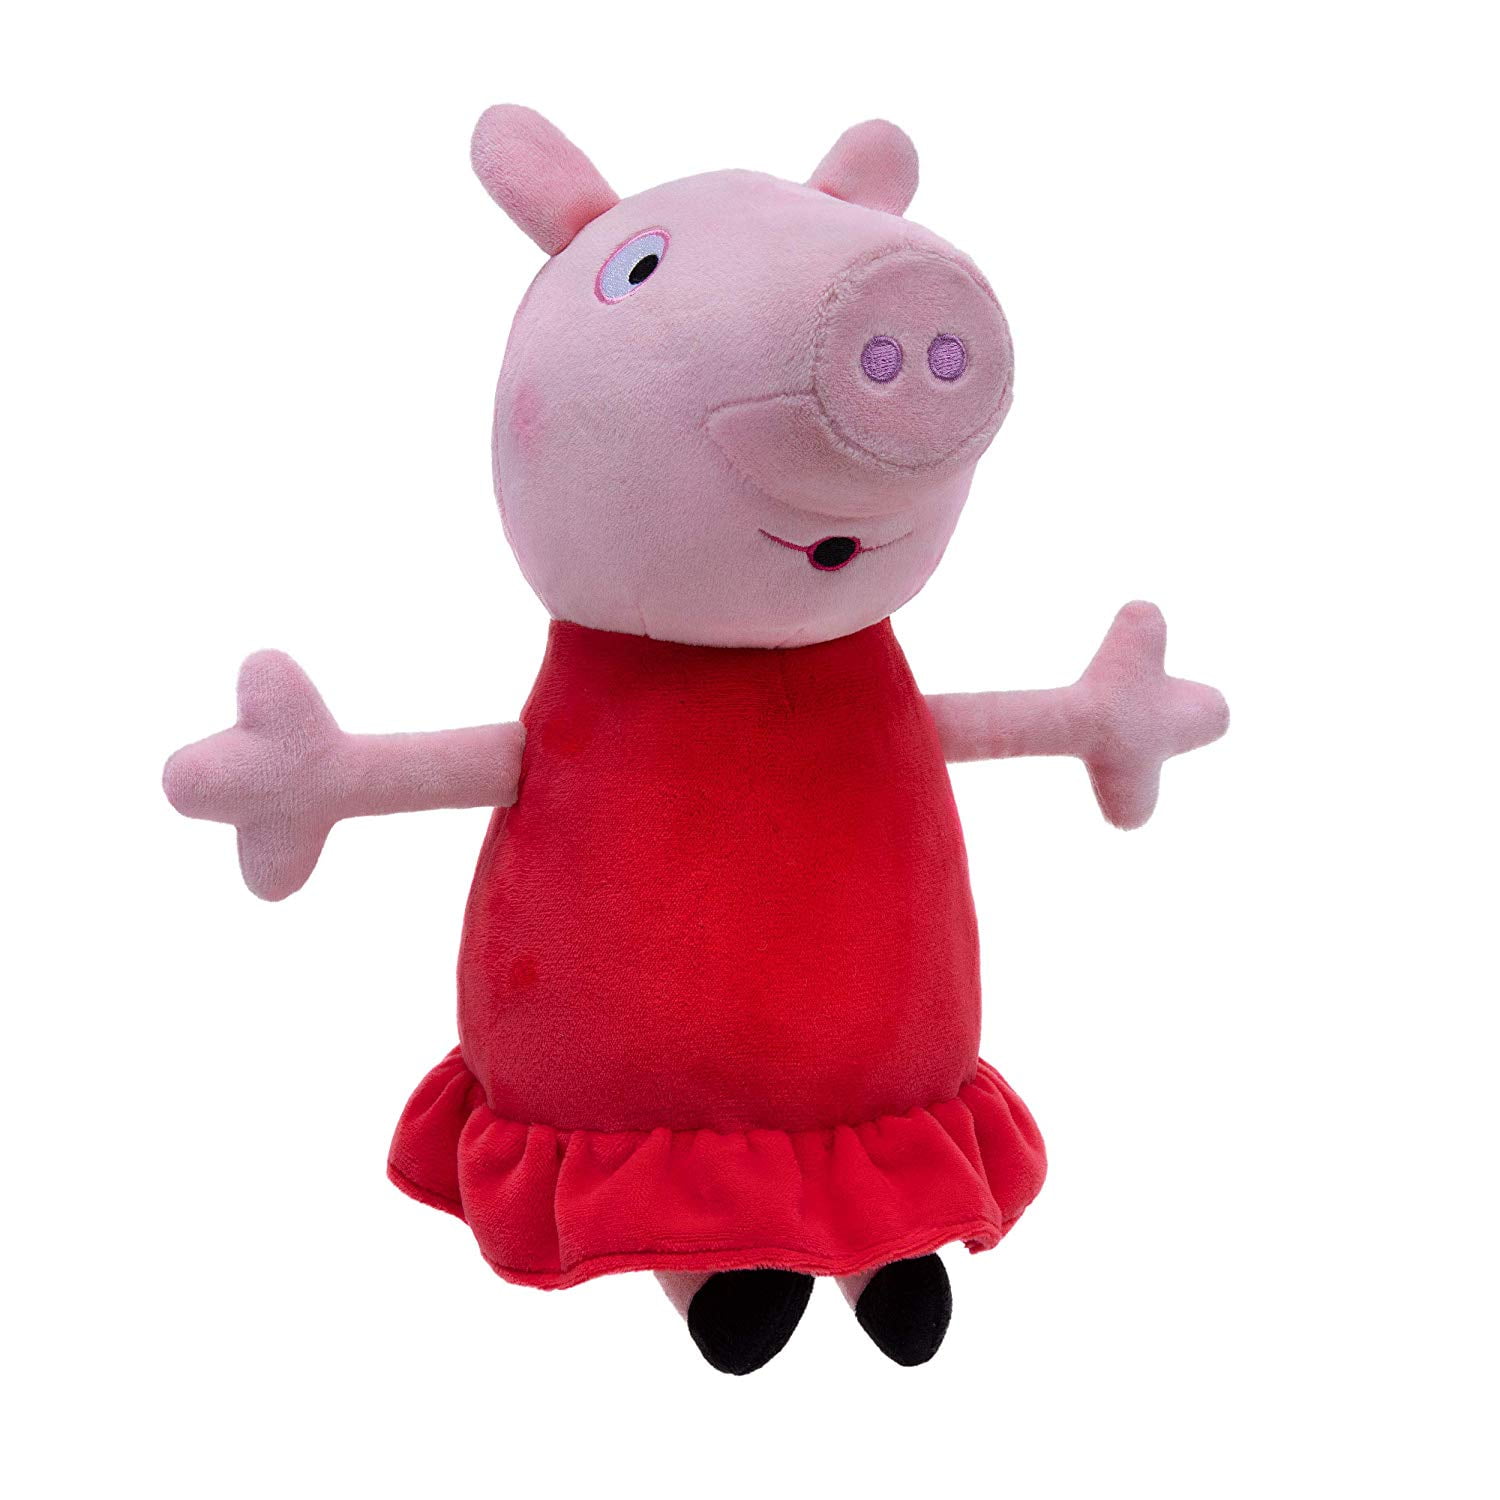 Peppa Pig 2003 Jazwares Hug N' Oink Talking Plush Toy 13in Original for sale online